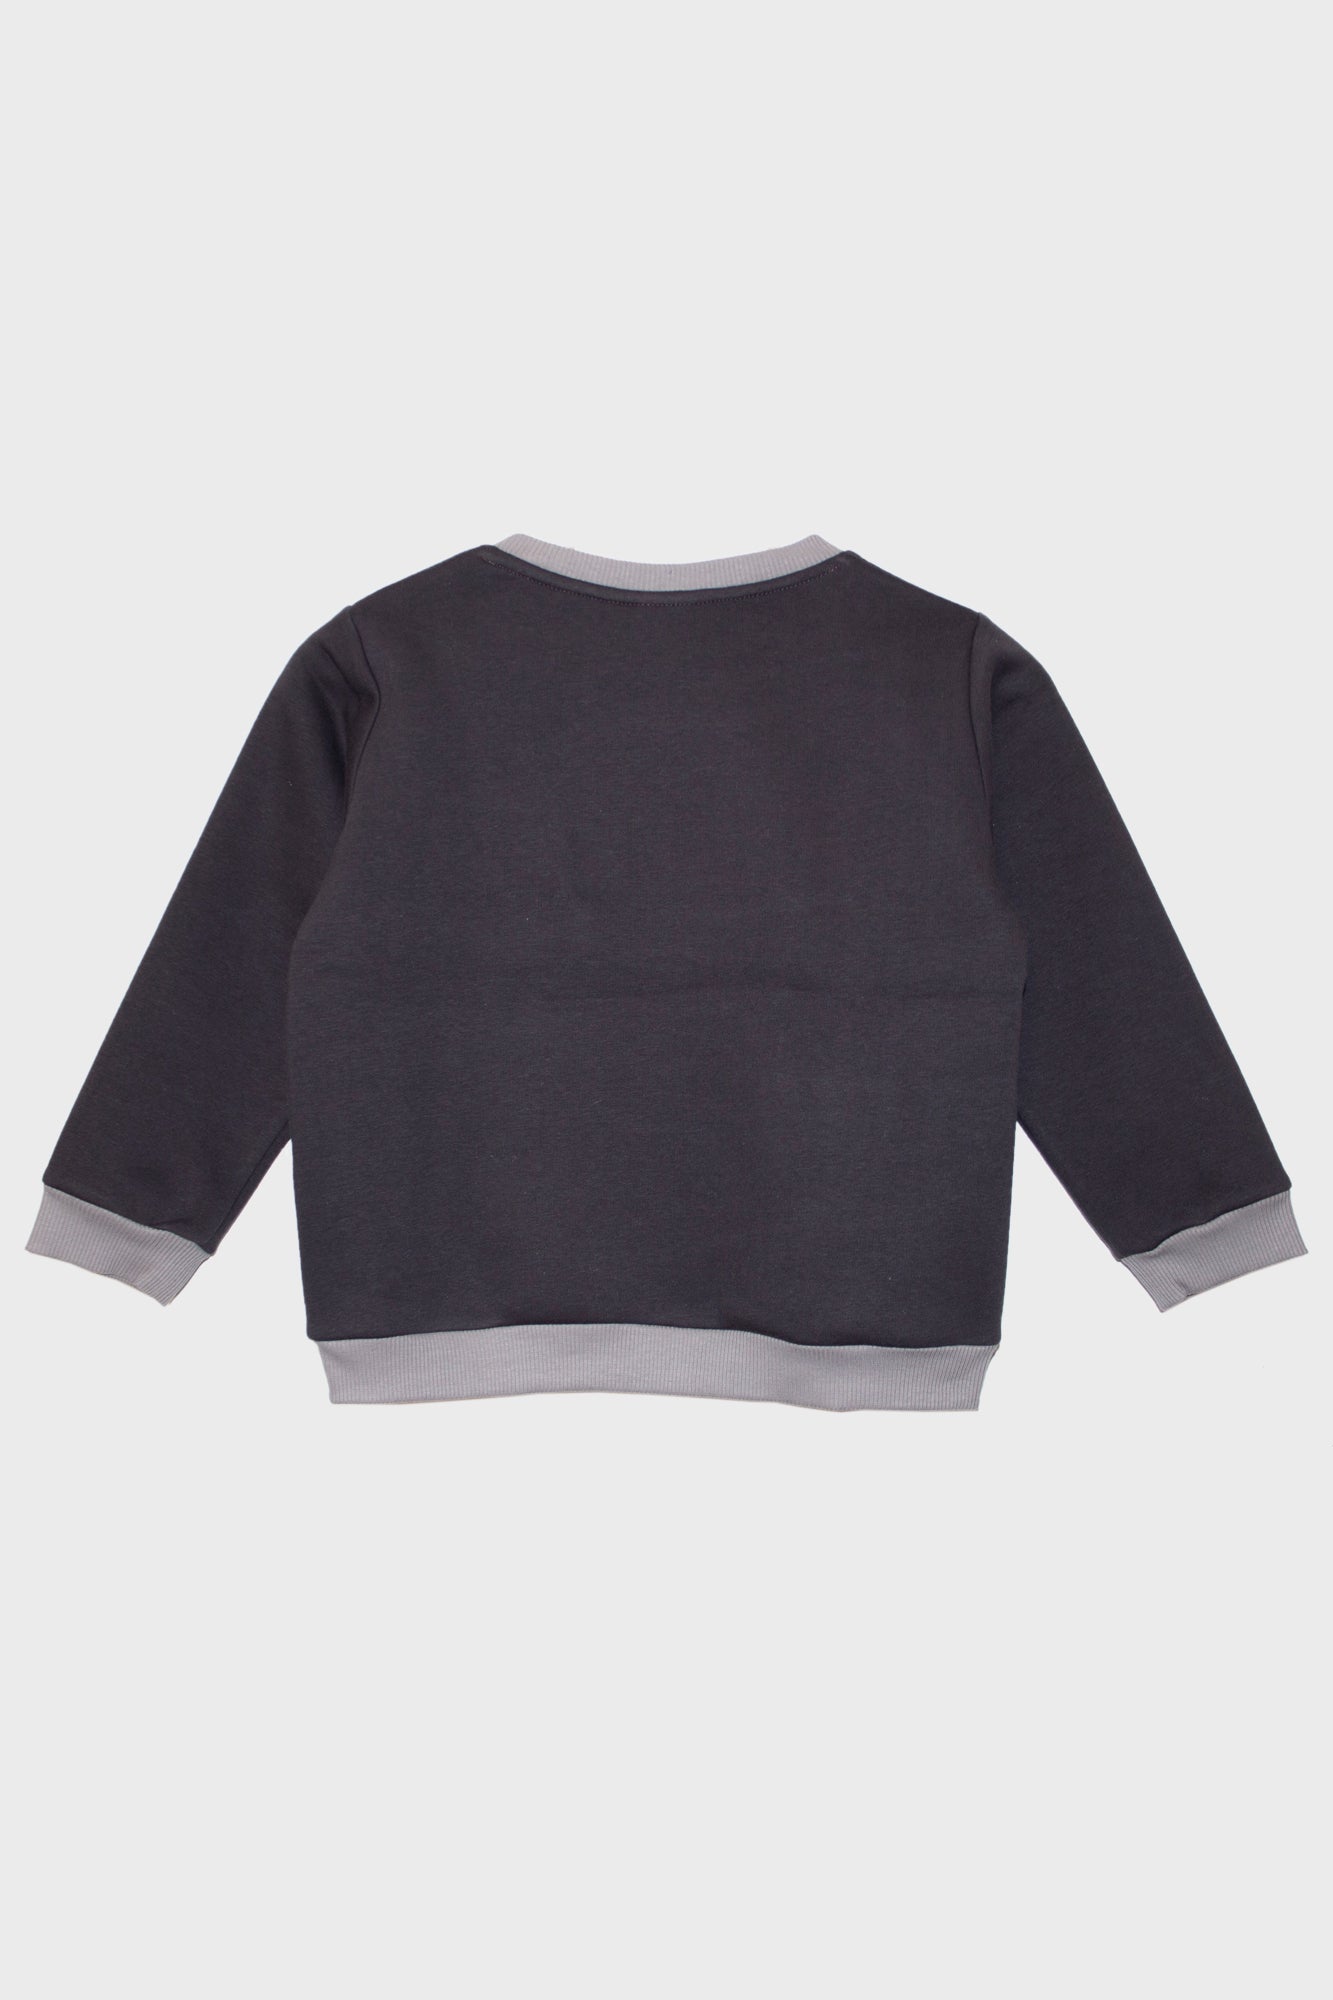 Kid’s One Wolf sweater, dark/light grey with red logo